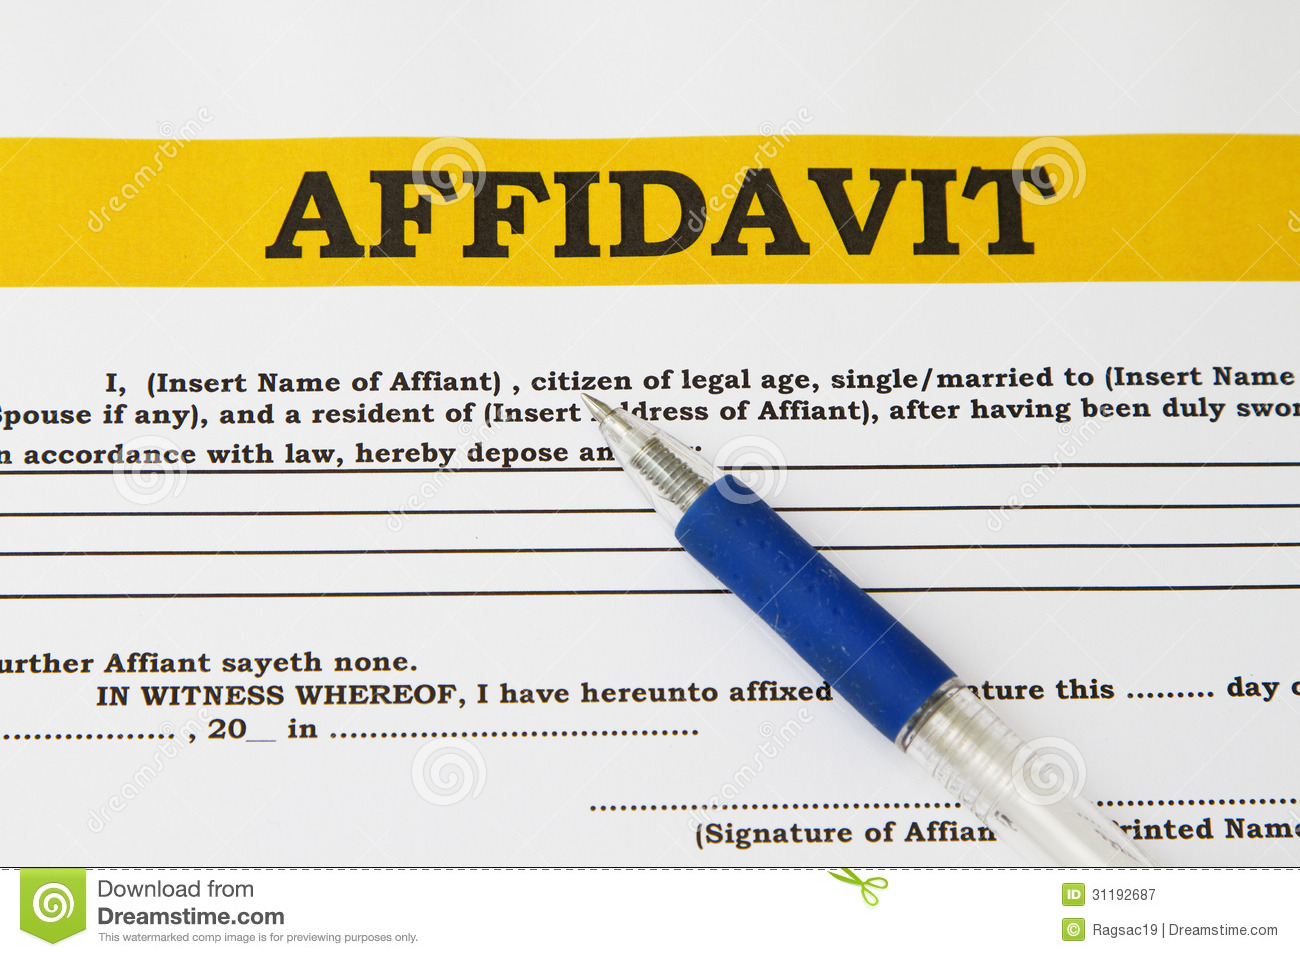 How to write an afidavit